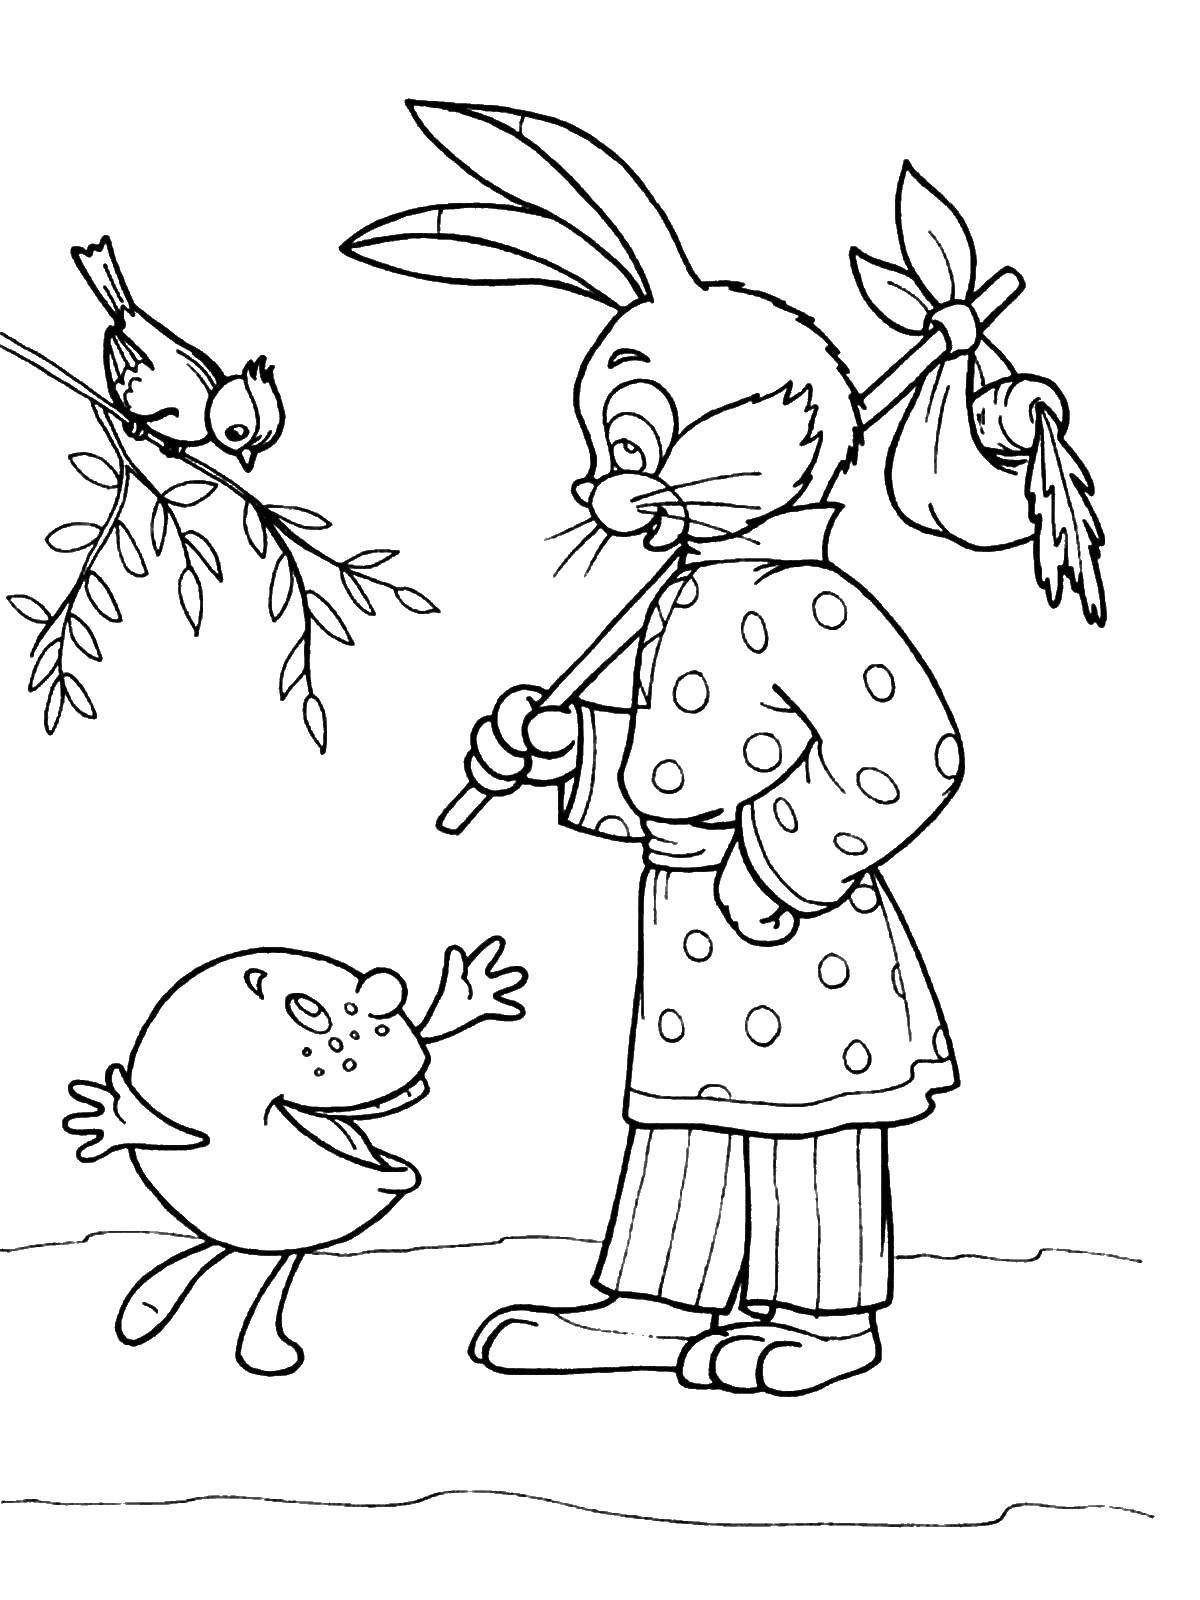 Coloring Bunny met a bun. Category gingerbread man . Tags:  Fairy Tales, Gingerbread Man.